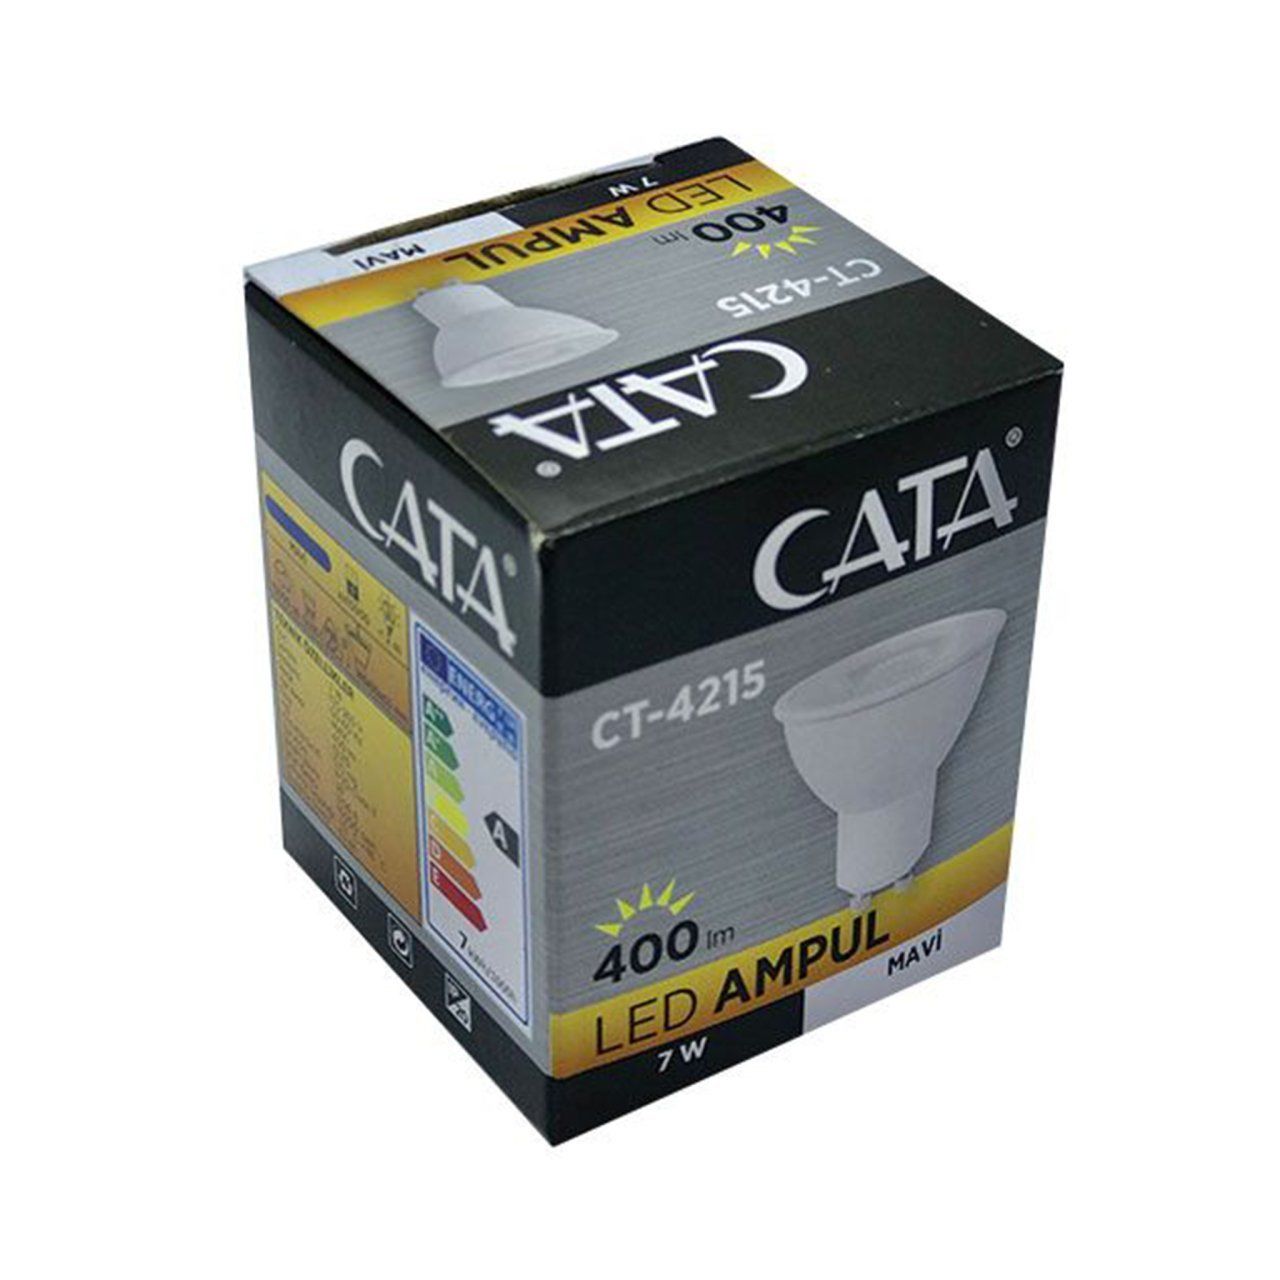 Cata 7W Led Ampul Gu10 4000K Ct-4215-GG